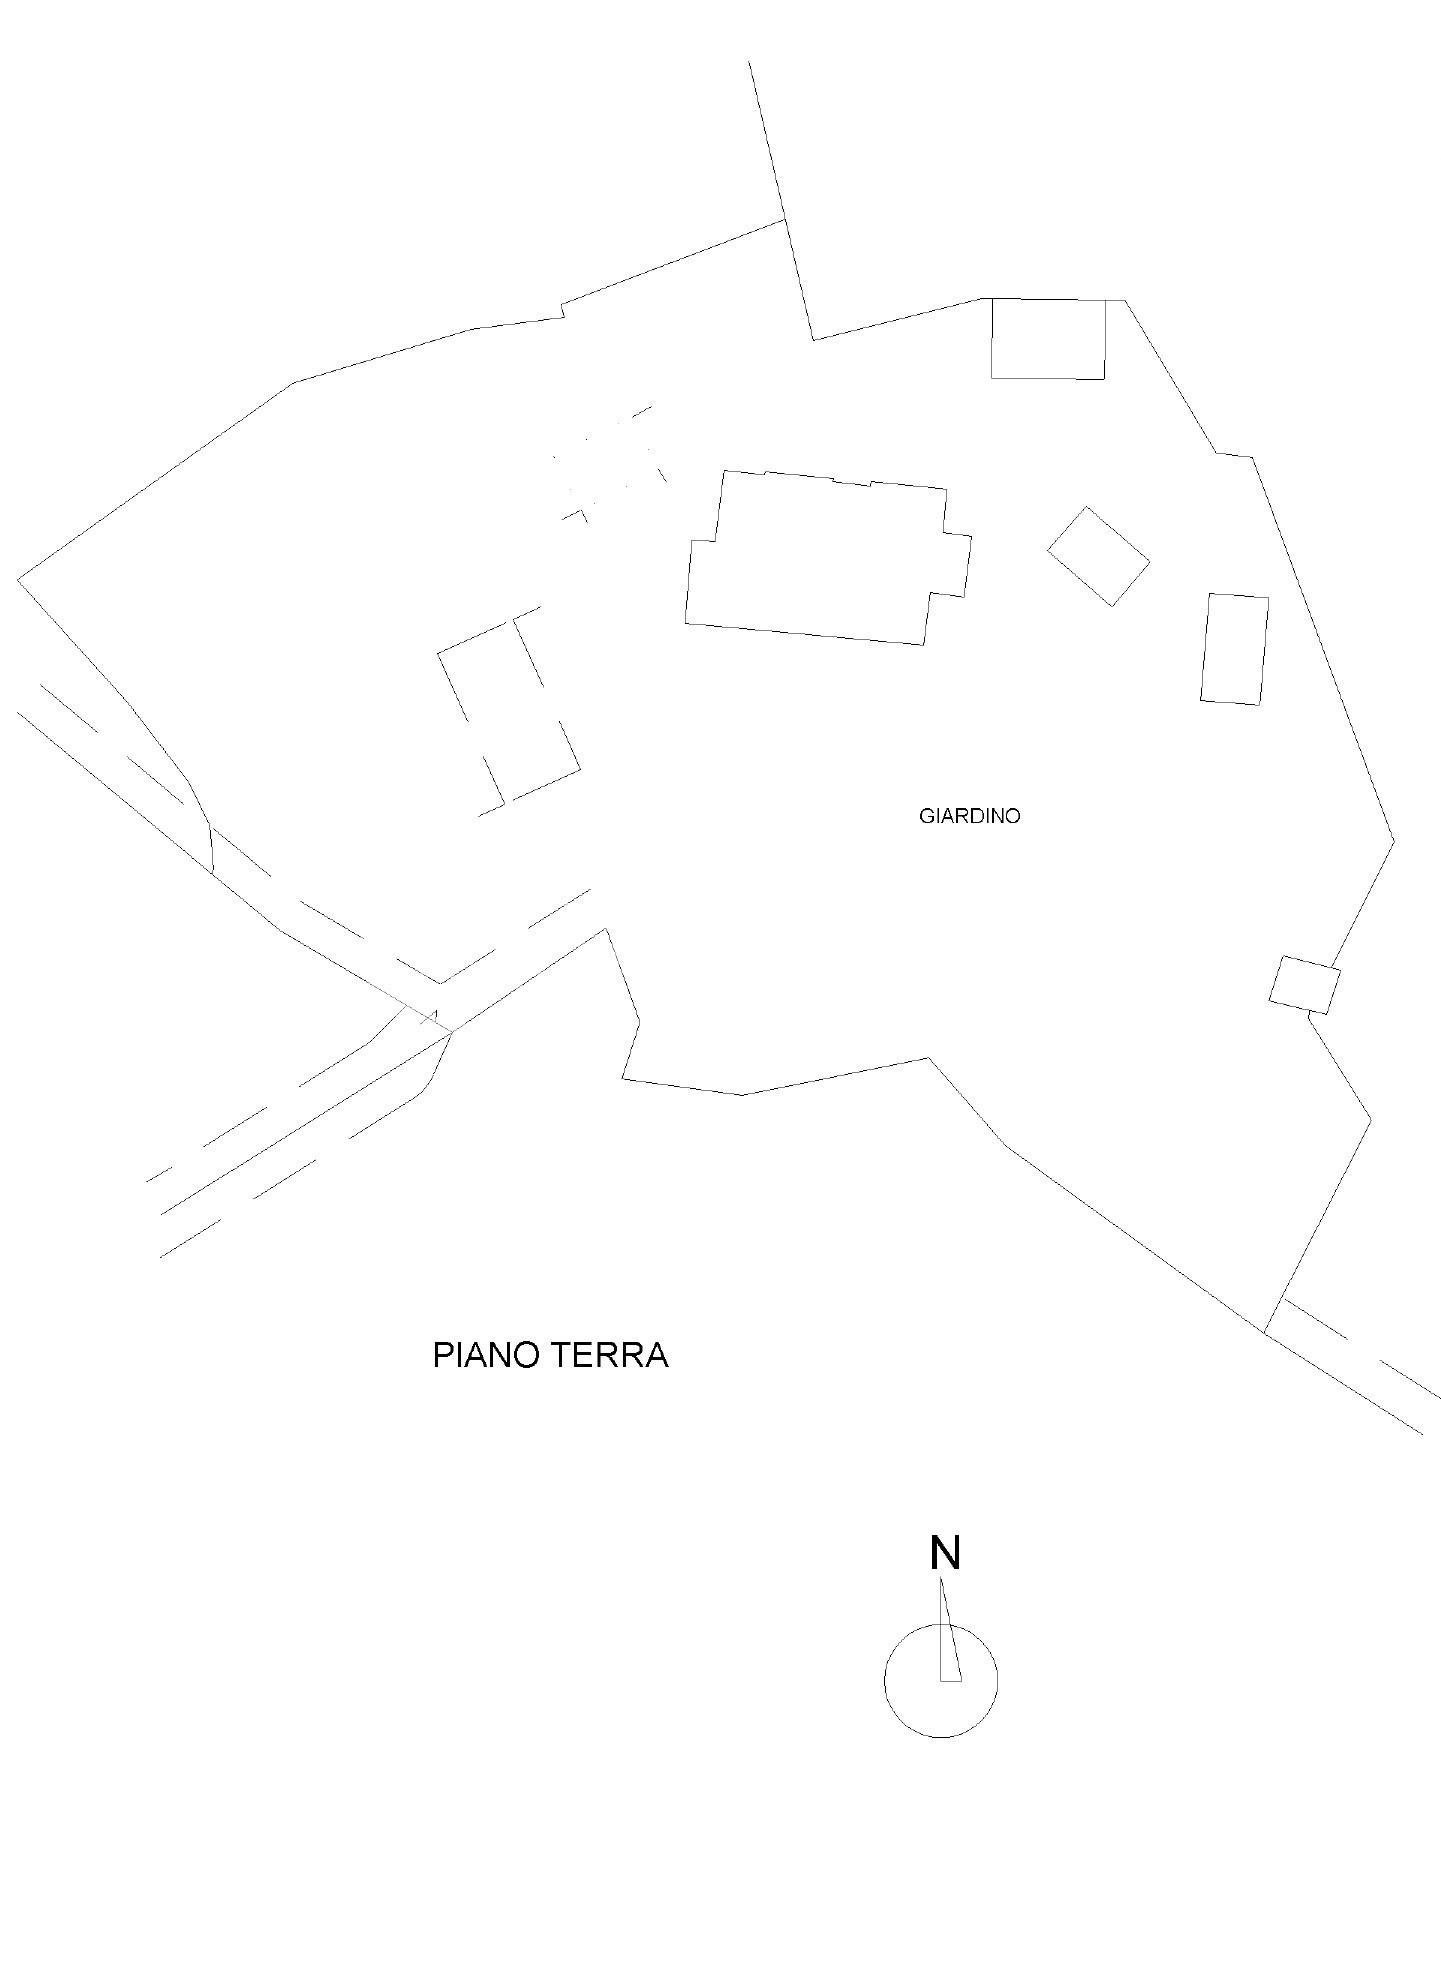 Farmhouse with pool in Cetona – Tuscany